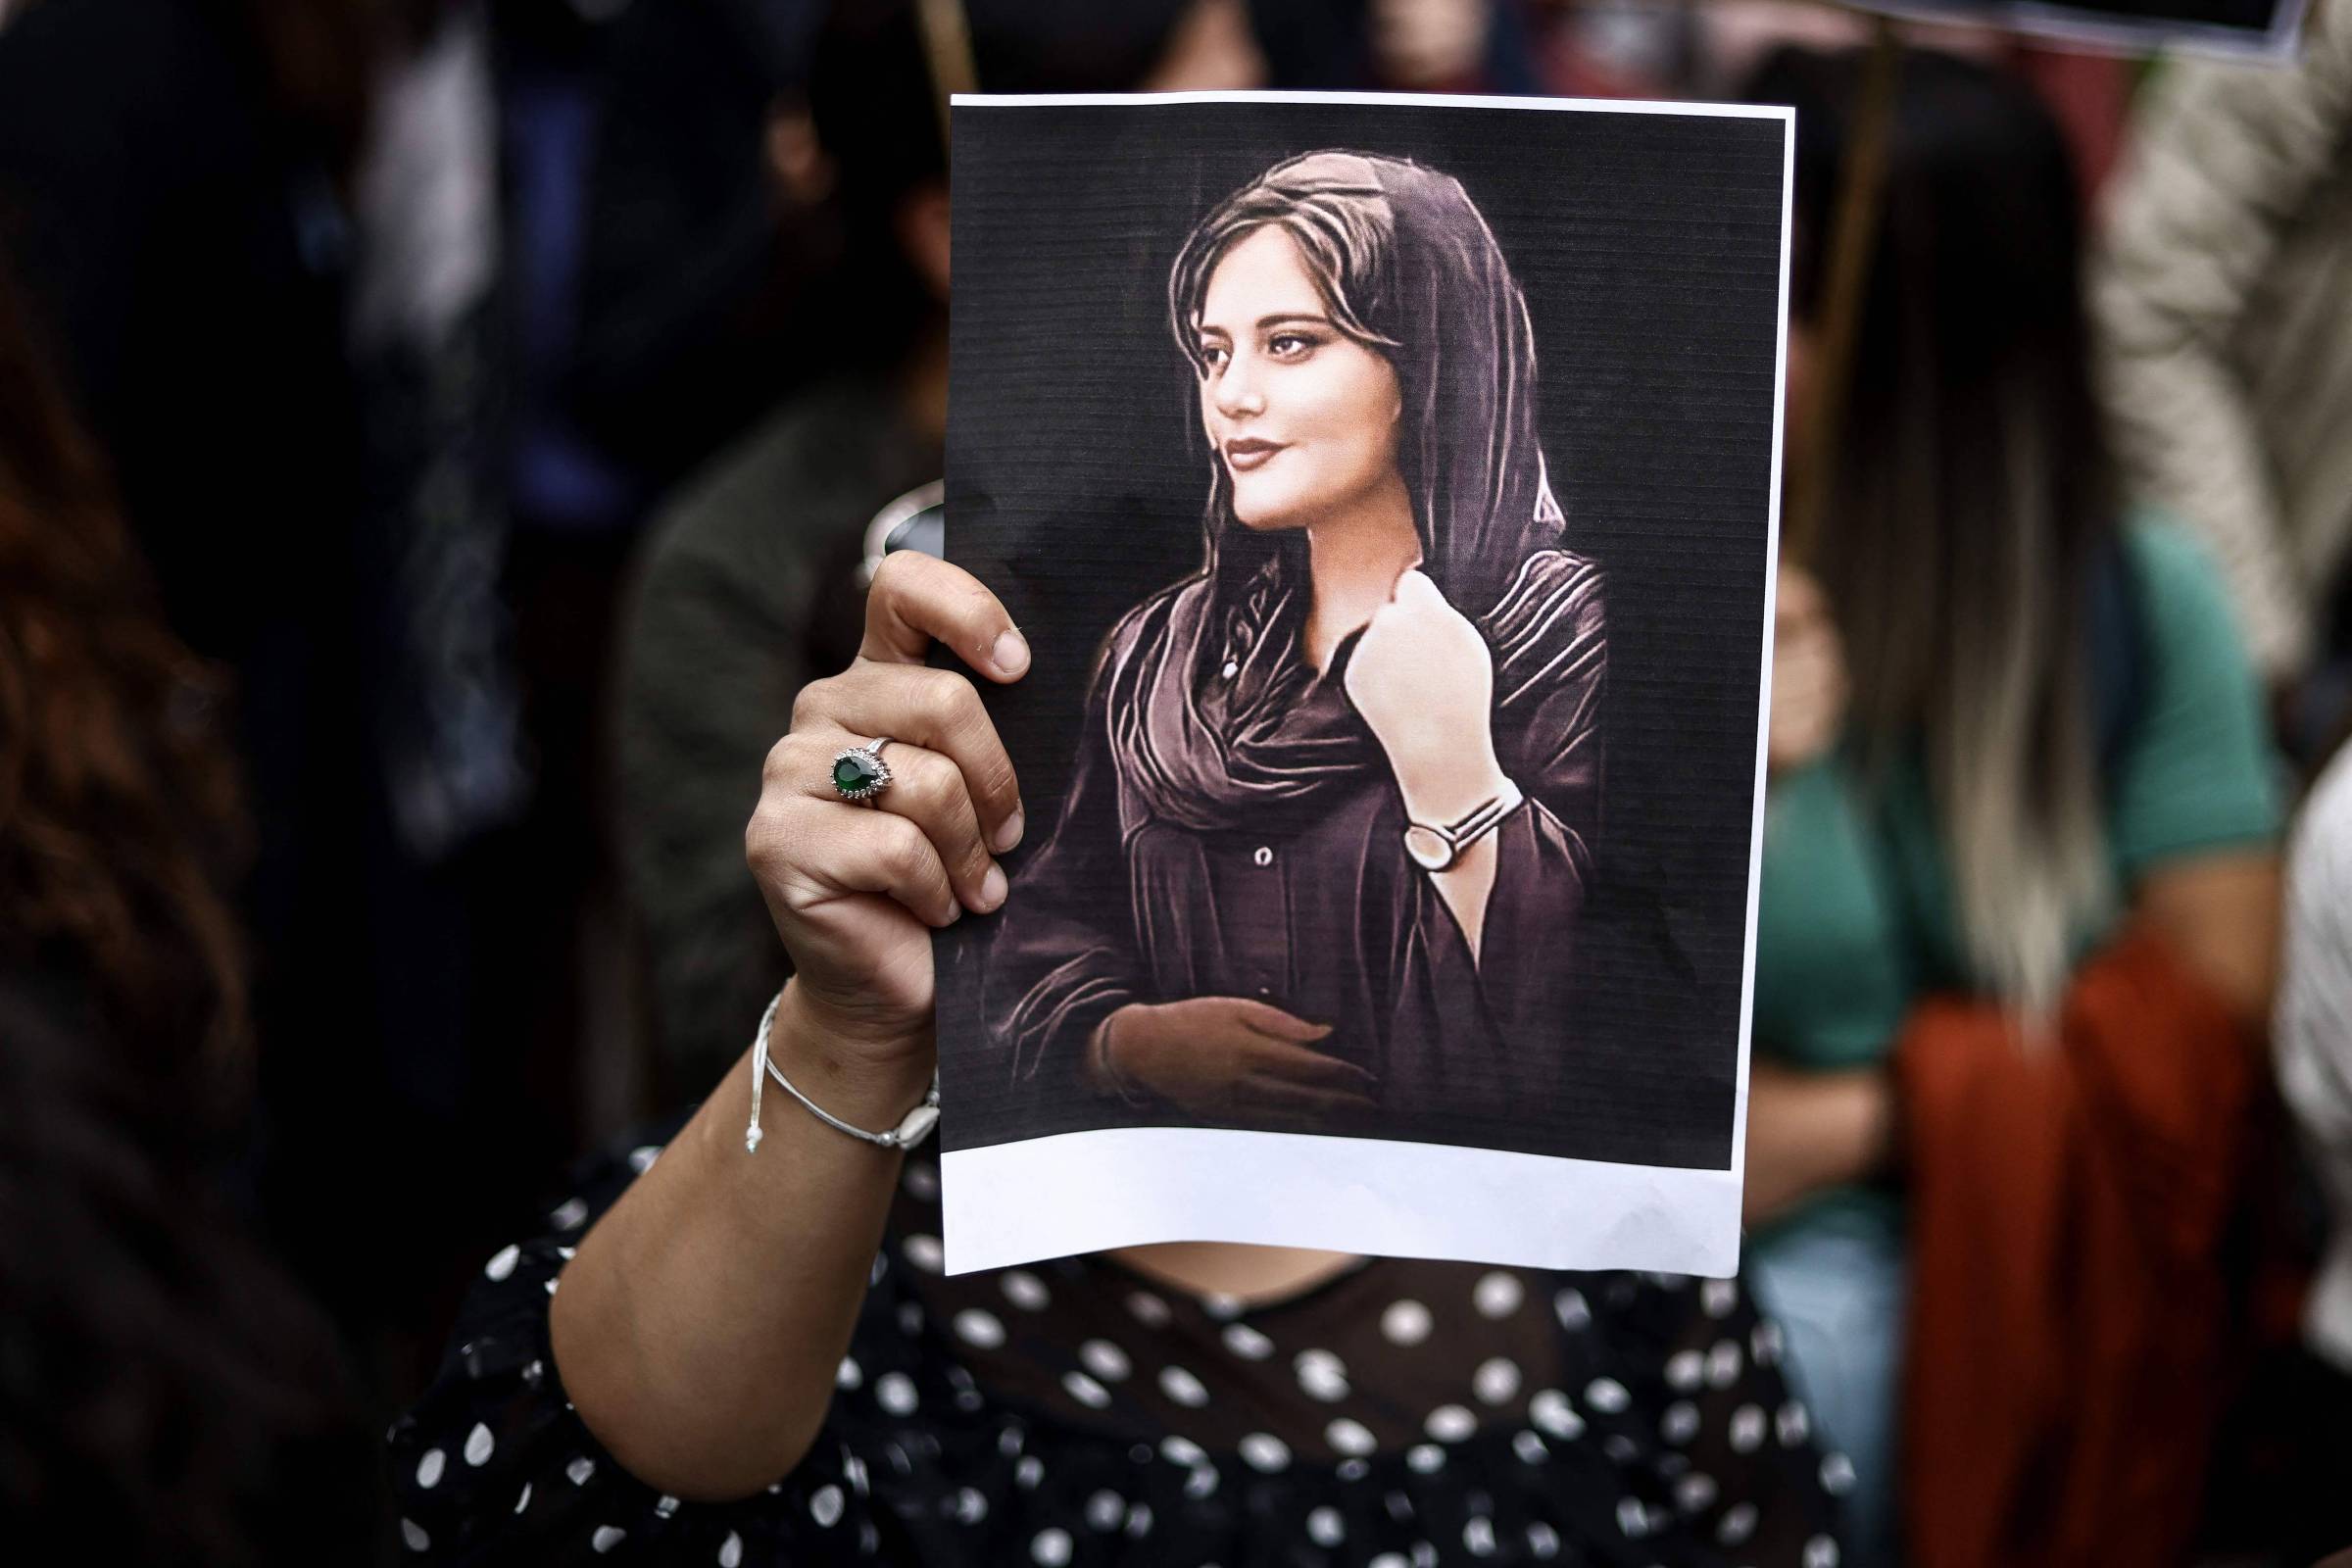 Iran has threatened Mahsa Amini’s family, says activist network 1 year after death